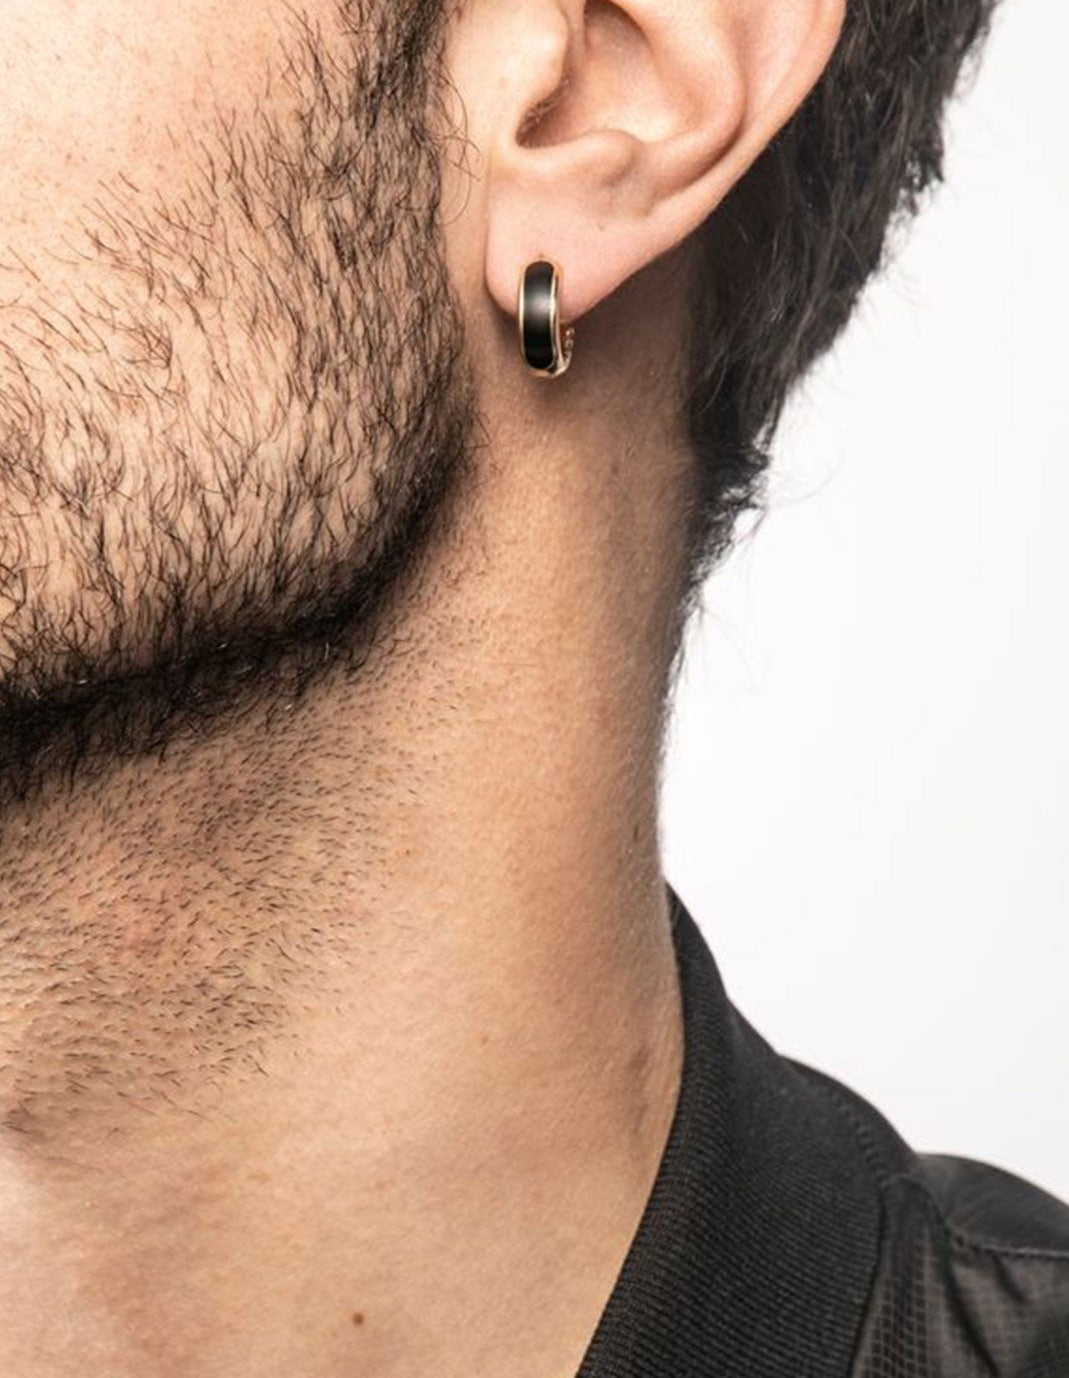 Buy Vama Fashions Salman Khan Inspired Kaju Bali Hoop Ear Rings for Men  Boys Man Unisex Ear Rings - Fancy Earrings Set with Piercing for Mens at  Amazon.in